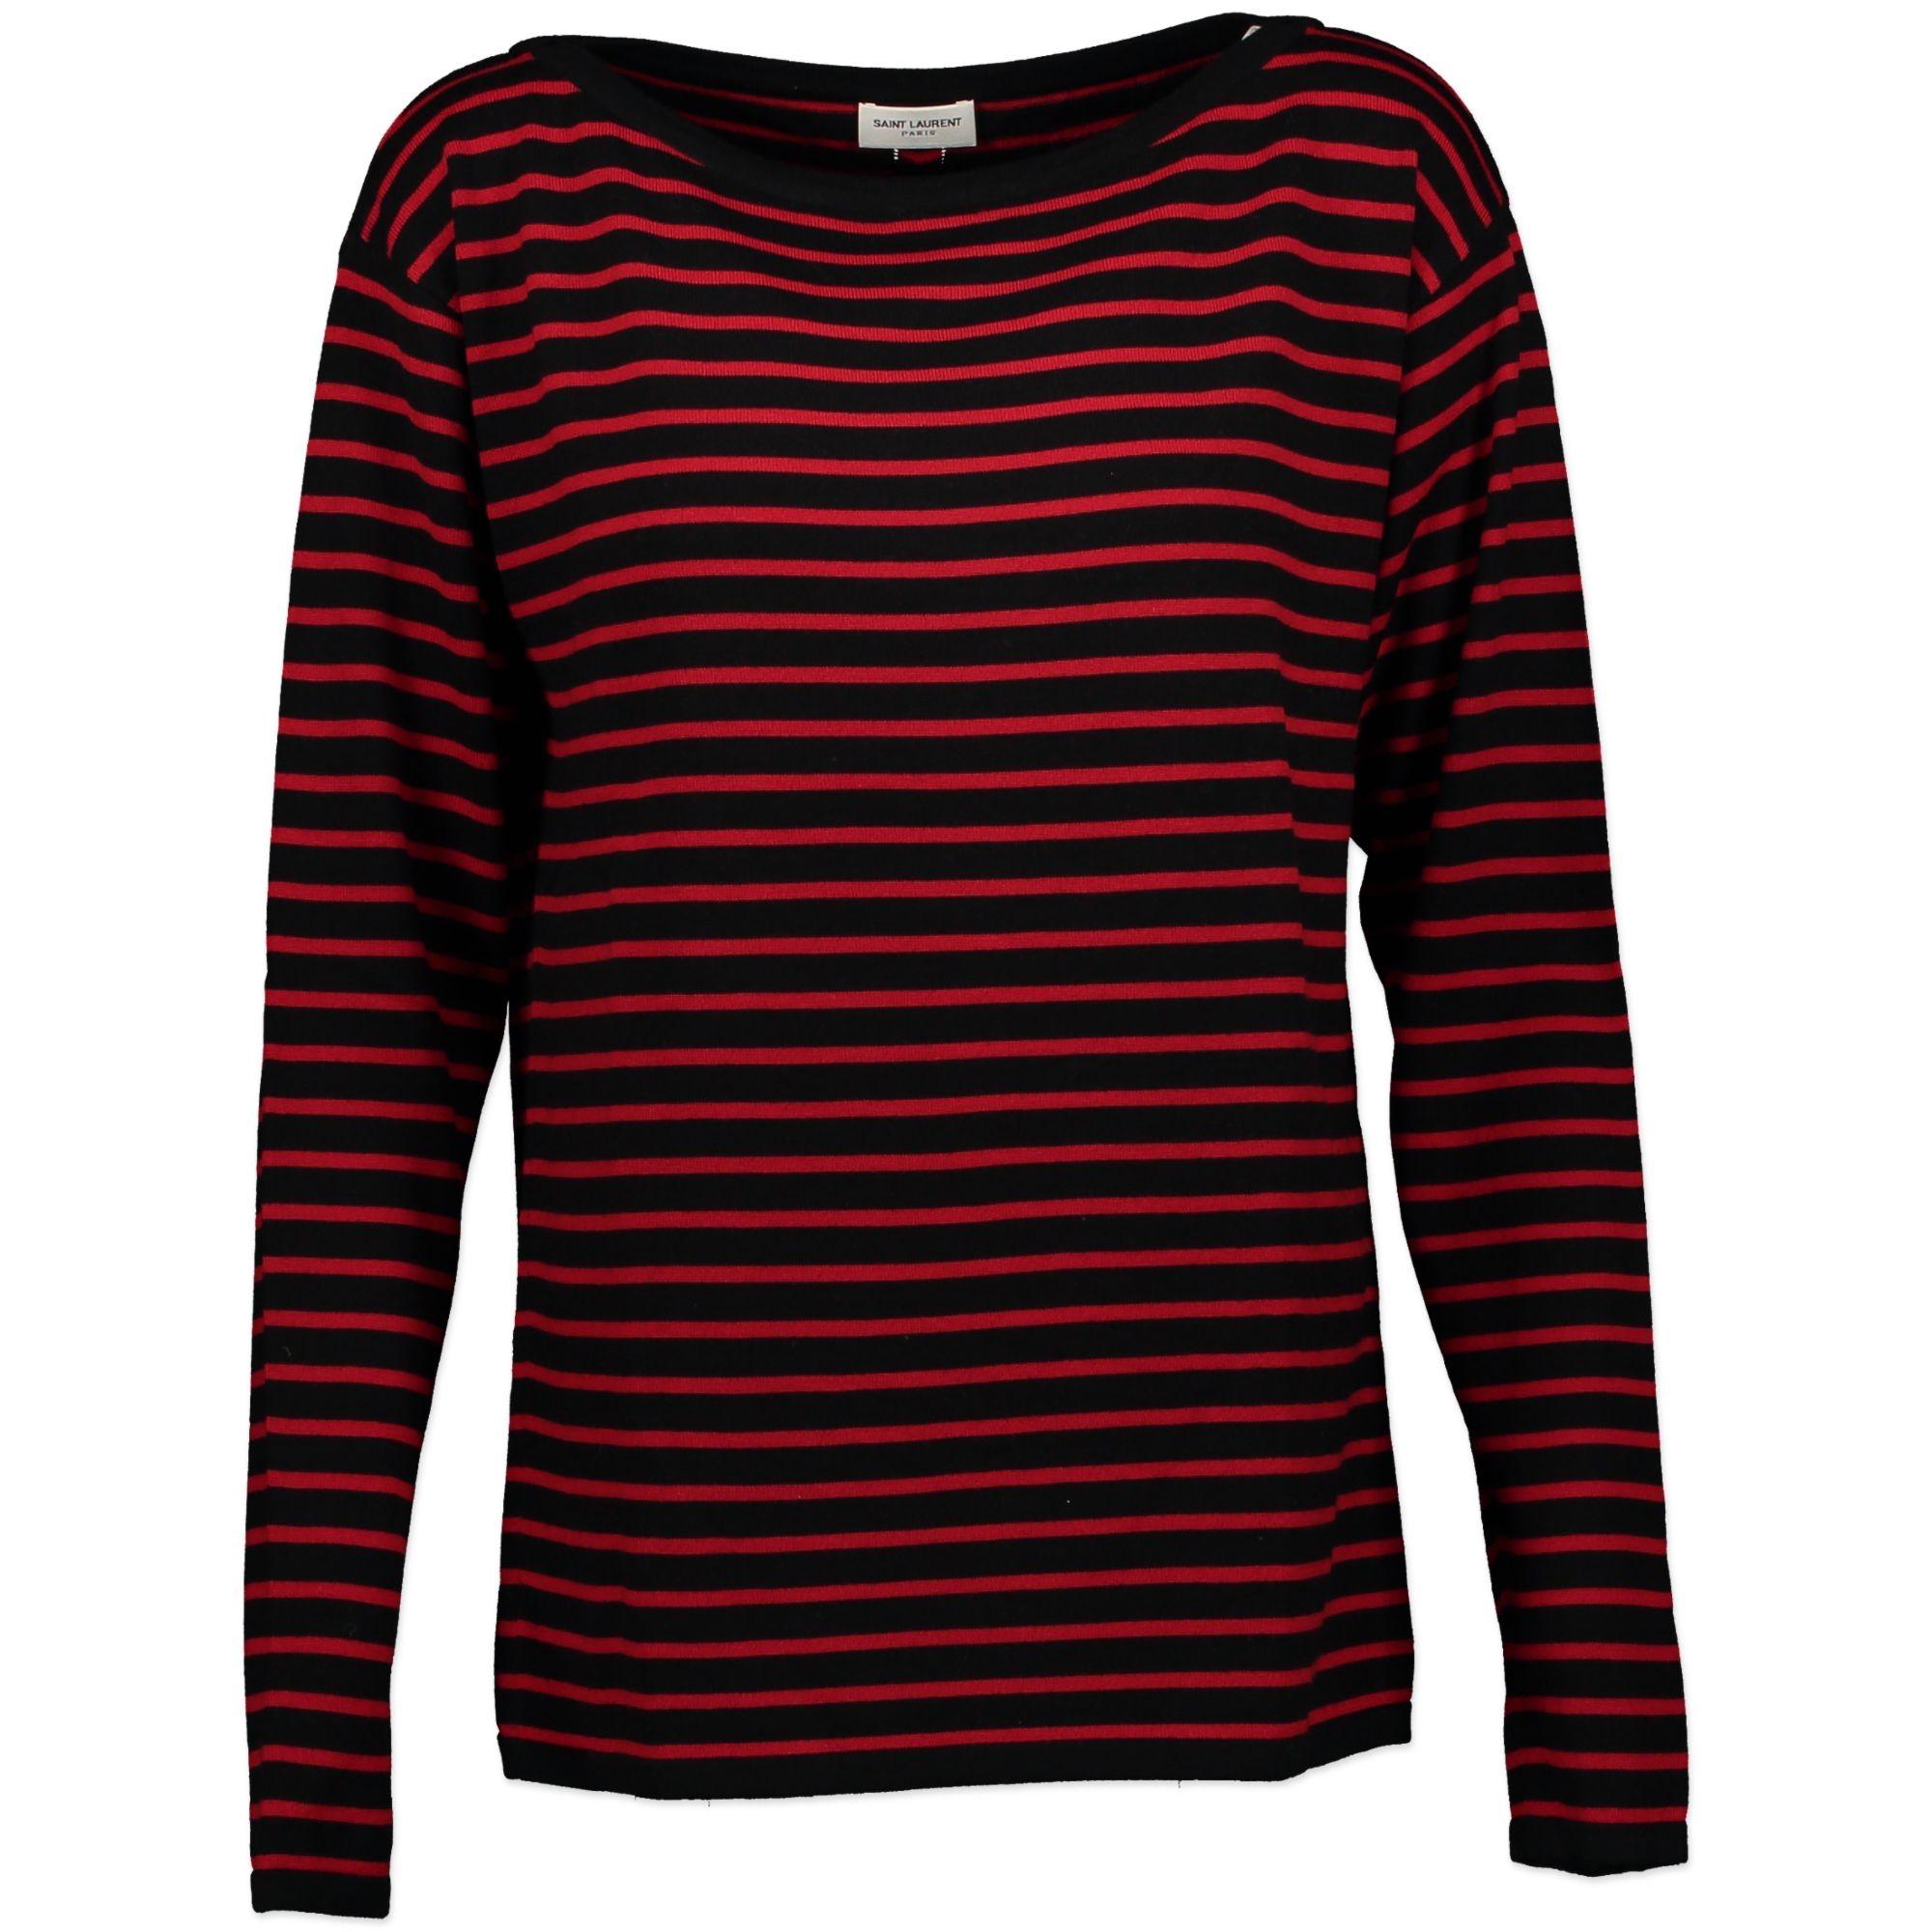 Black Saint Laurent Wool Striped Top - size XS